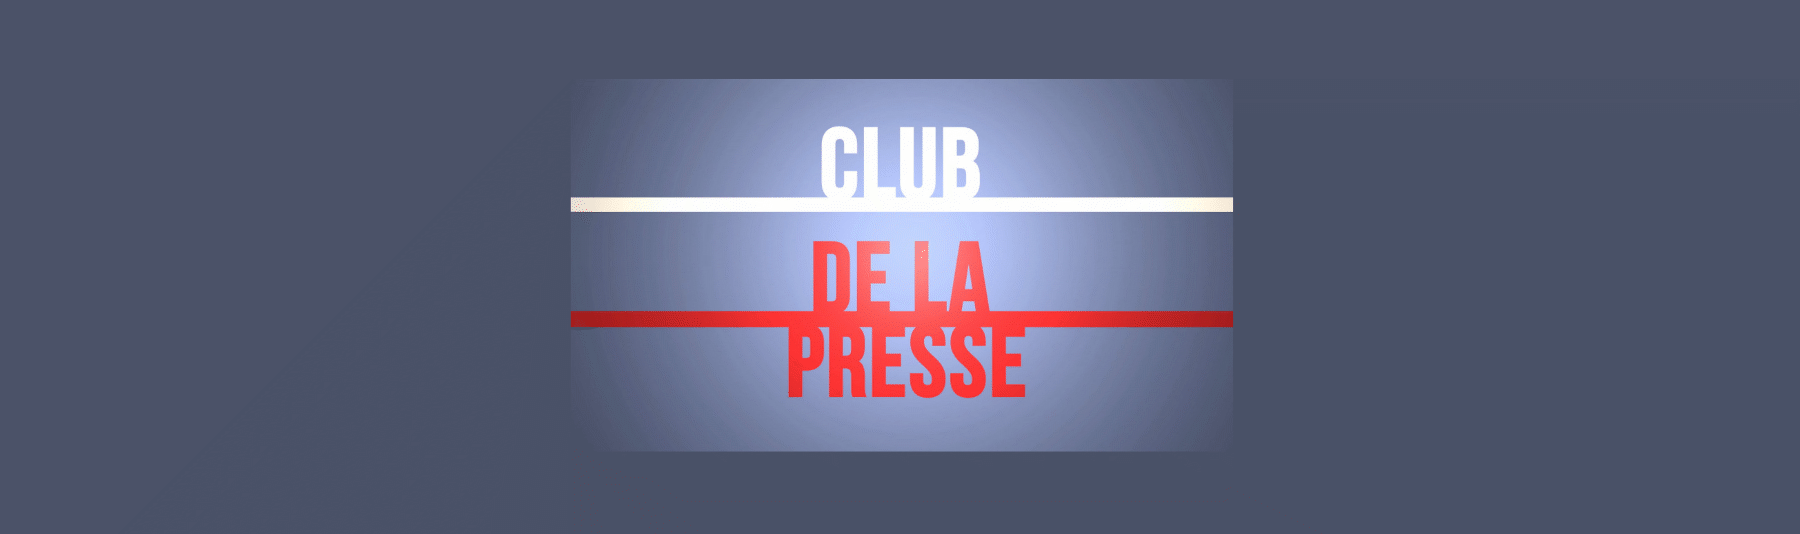 Club de la presse